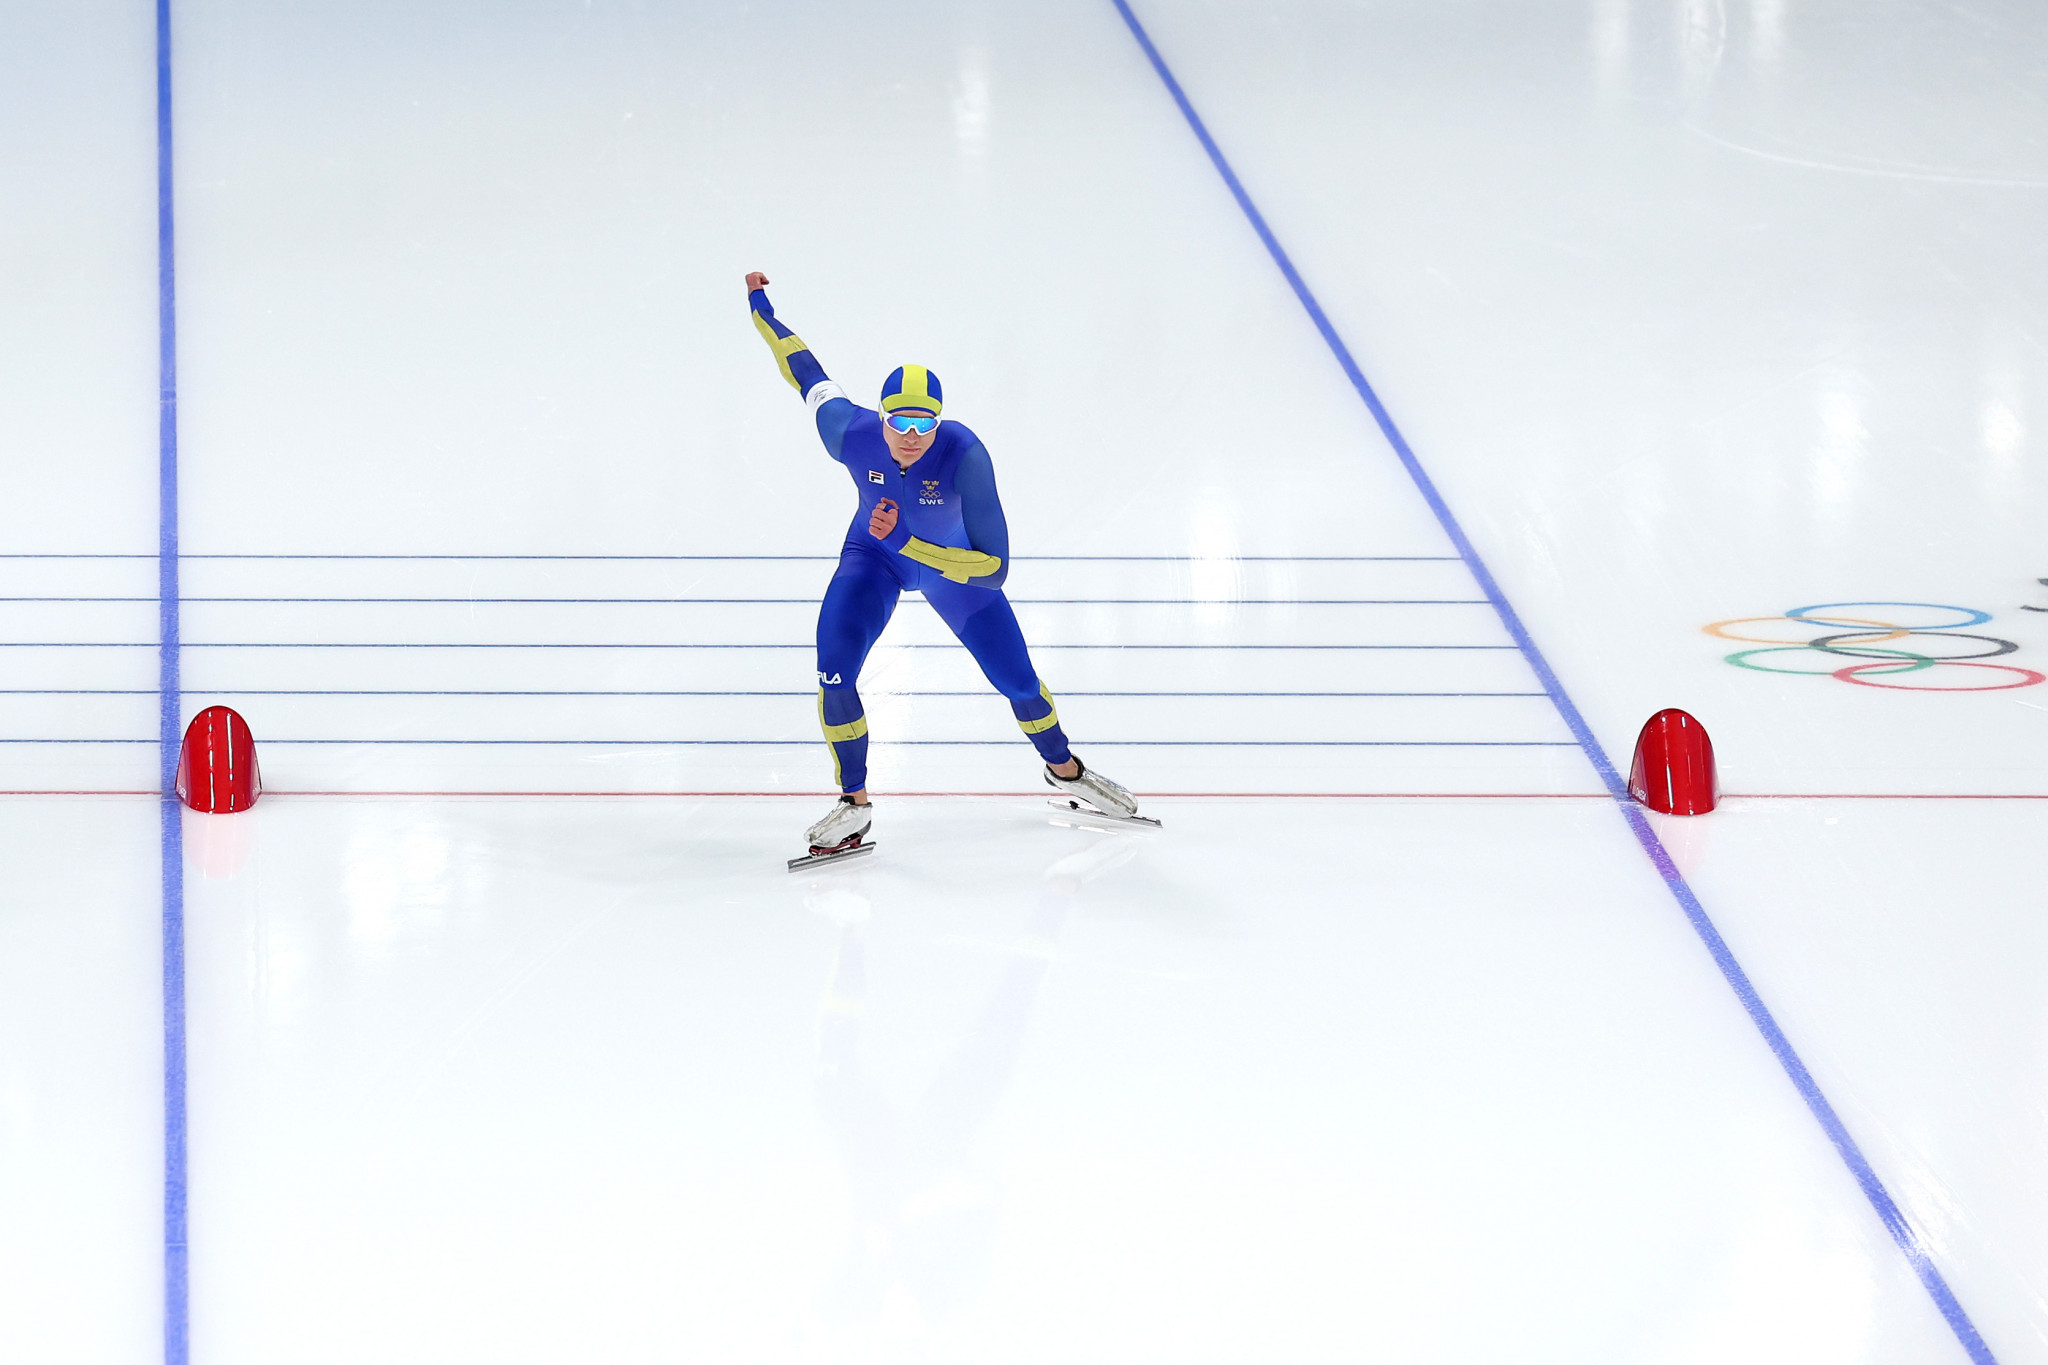 Van Der Poel sets speed skating world record on day seven of Beijing 2022